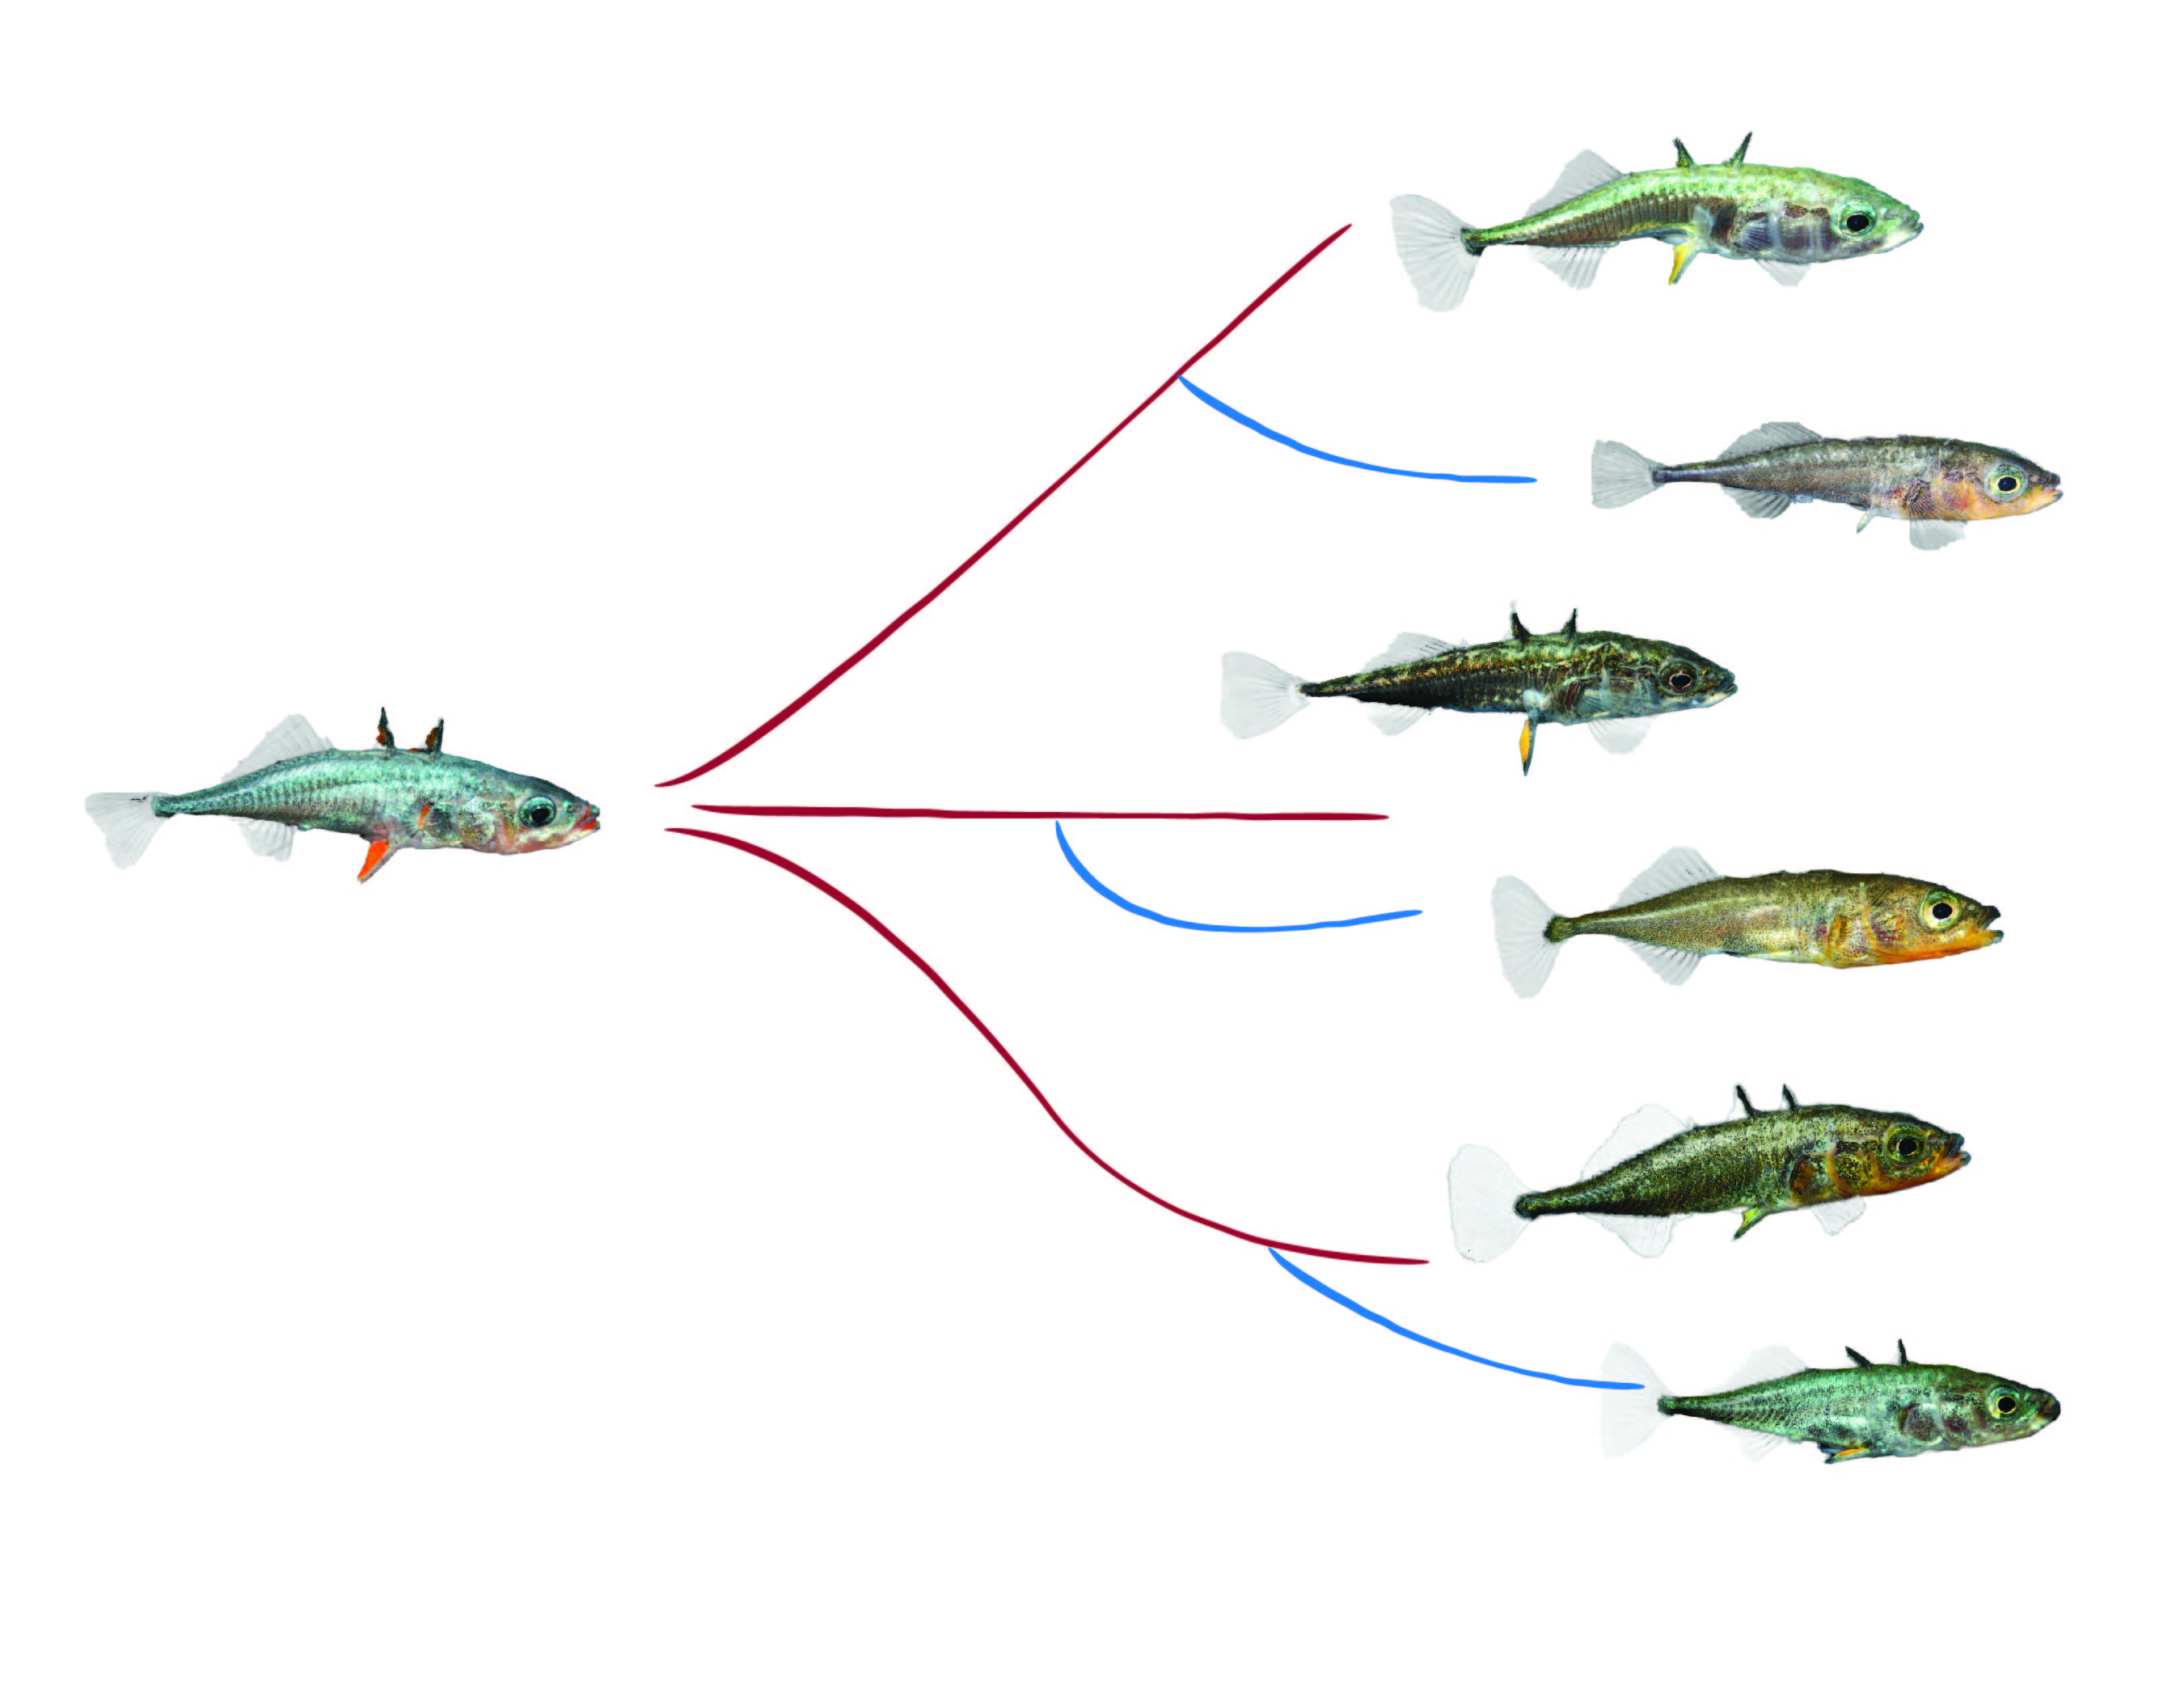 Stickleback freshwater forms have evolved from marine ancestors in parallel